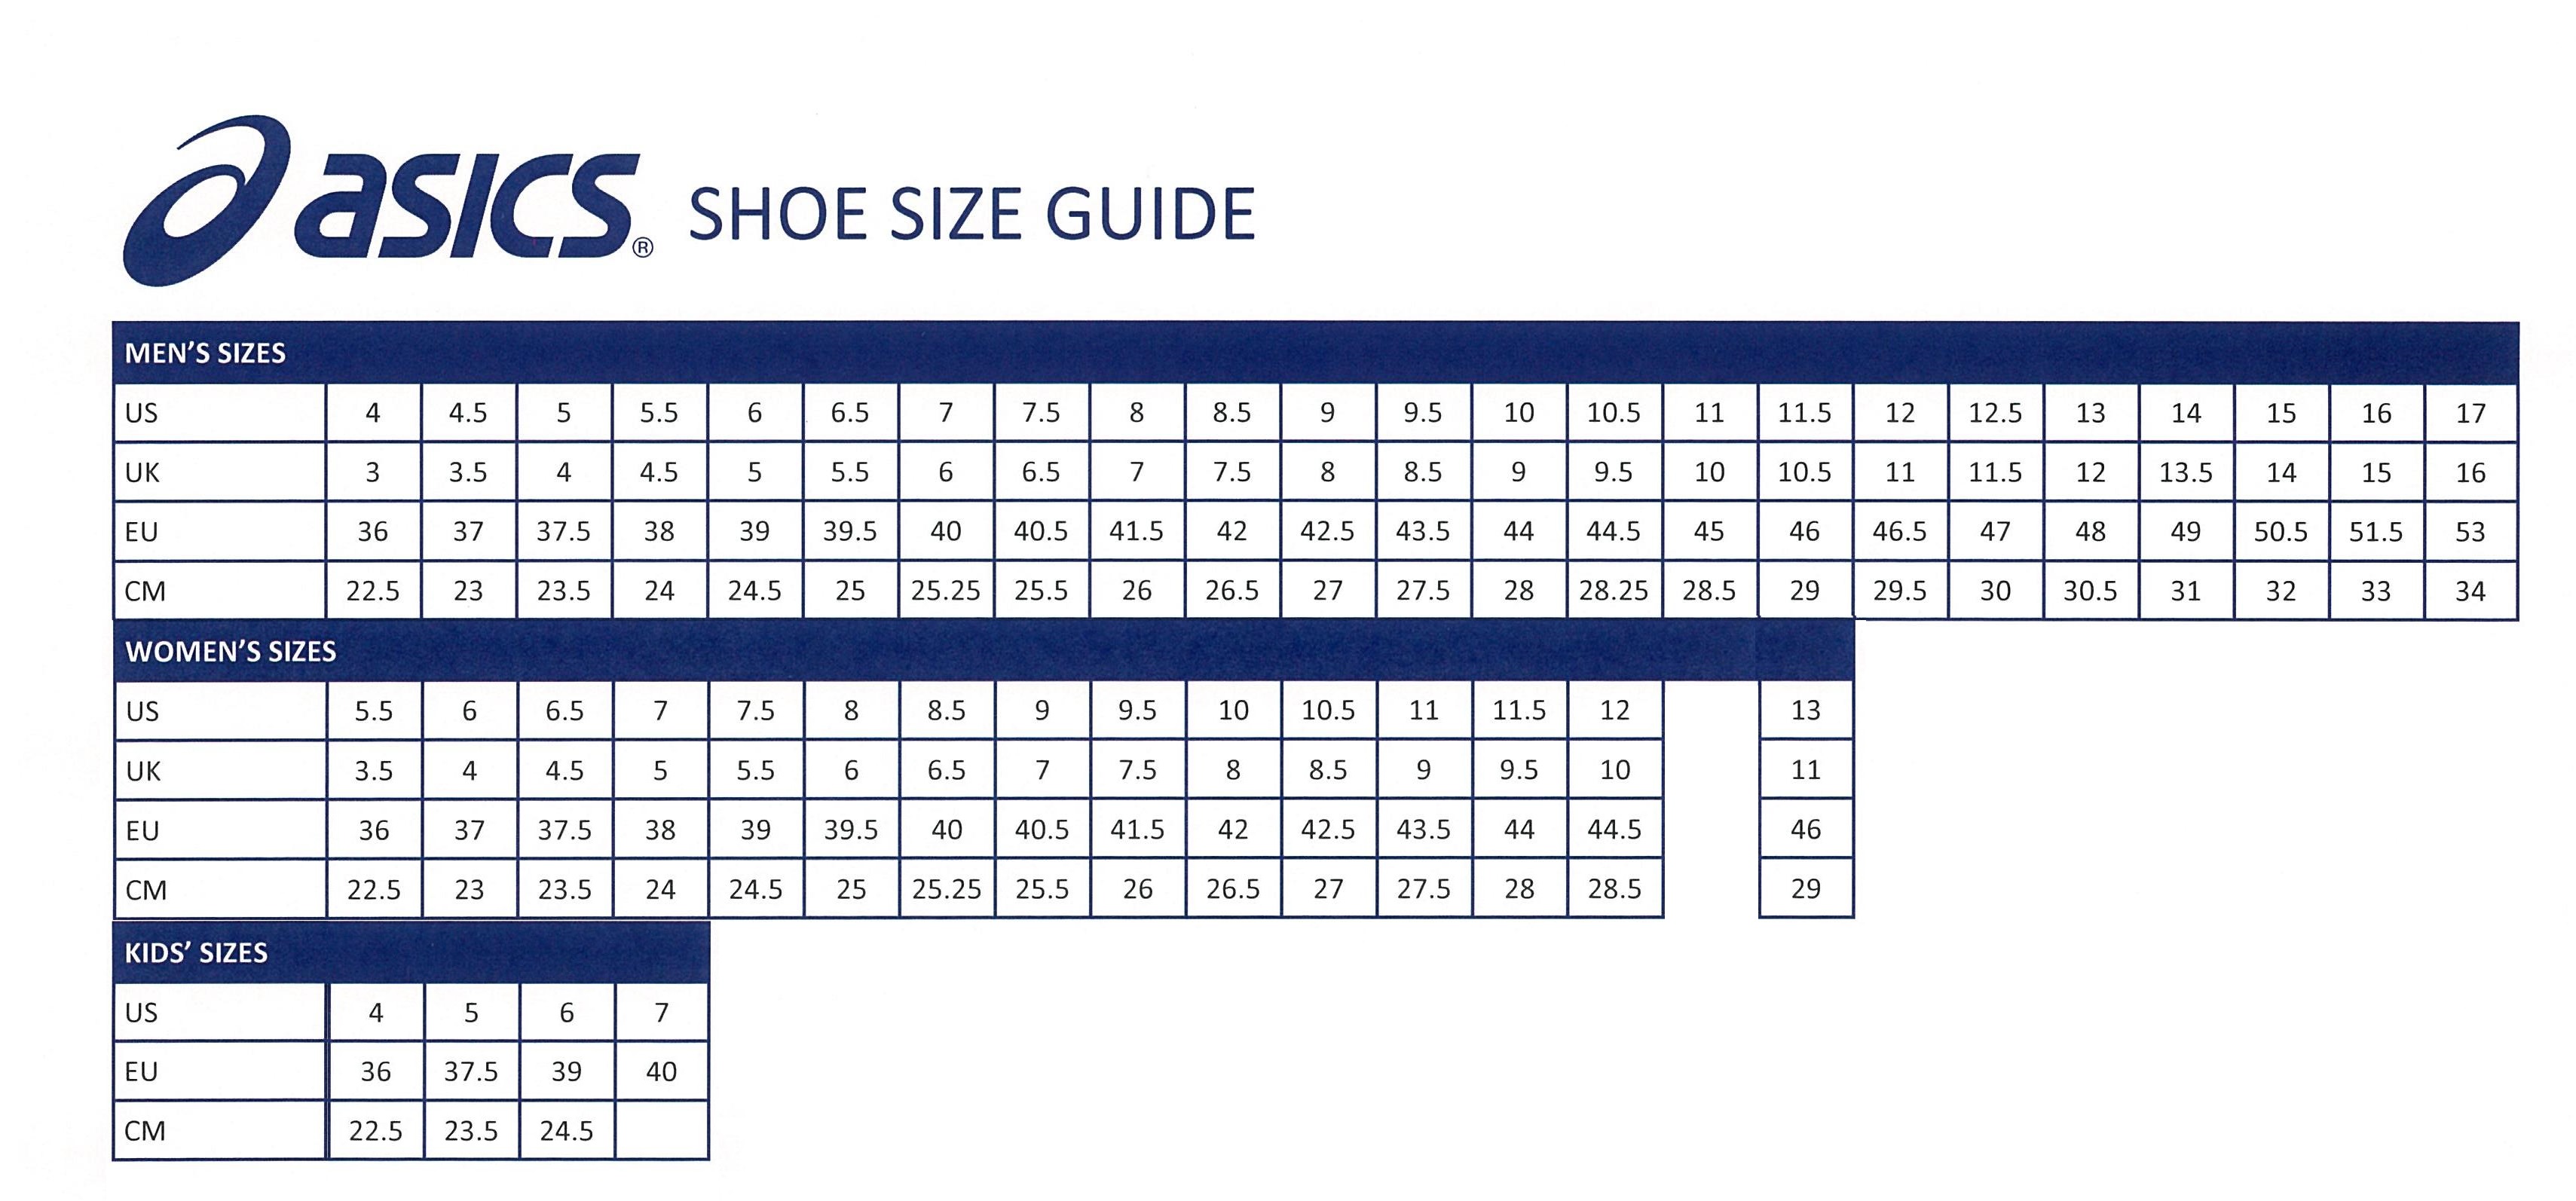 asics shoe size conversion chart, large deal off 72% - statehouse.gov.sl